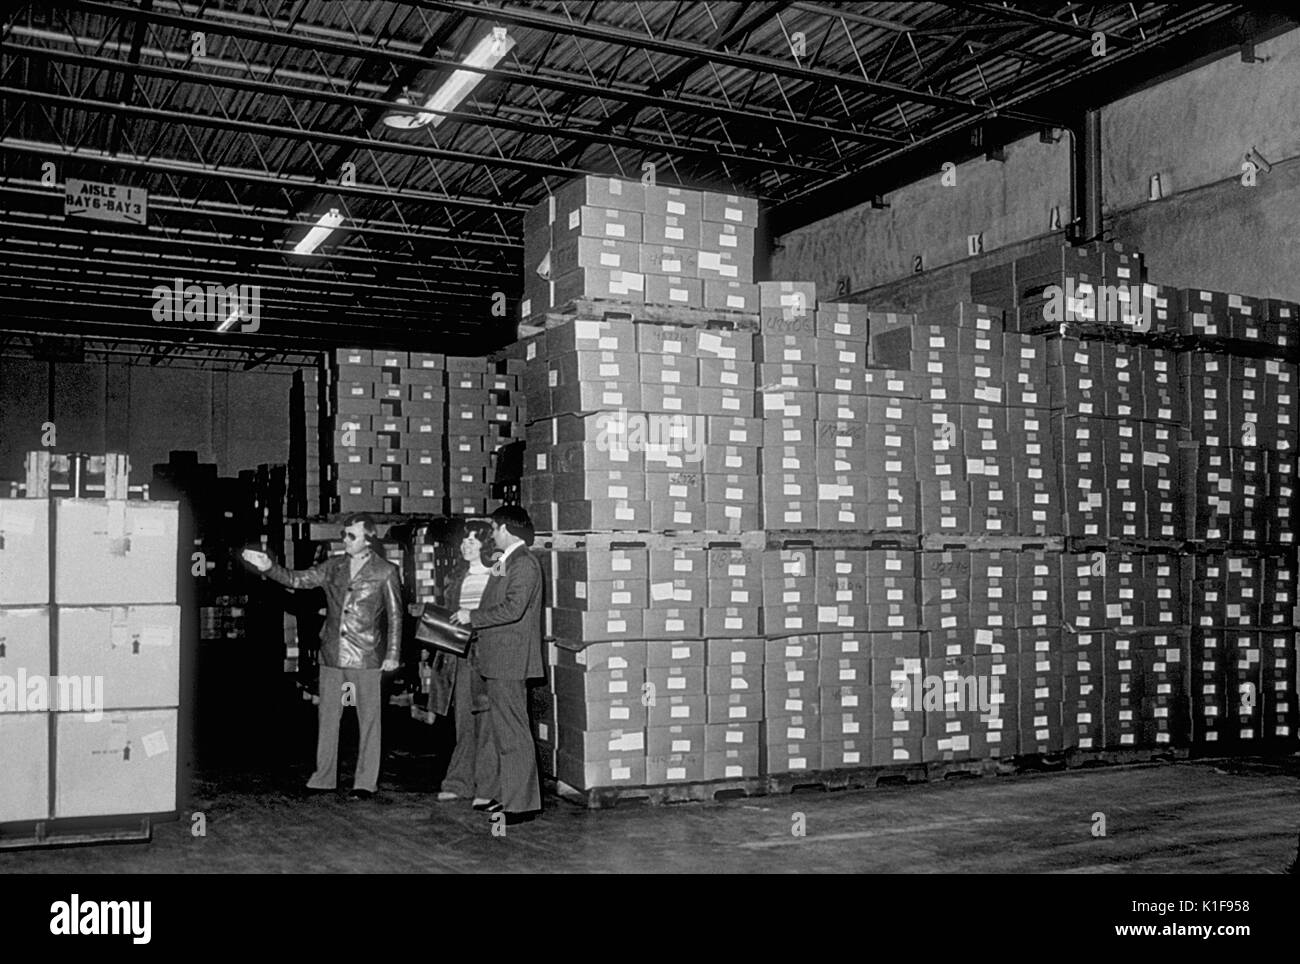 Stored boxes of swine influenza vaccine. IMGSETINF, Stored boxes of swine influenza vaccine. Image courtesy CDC. 1974. Stock Photo